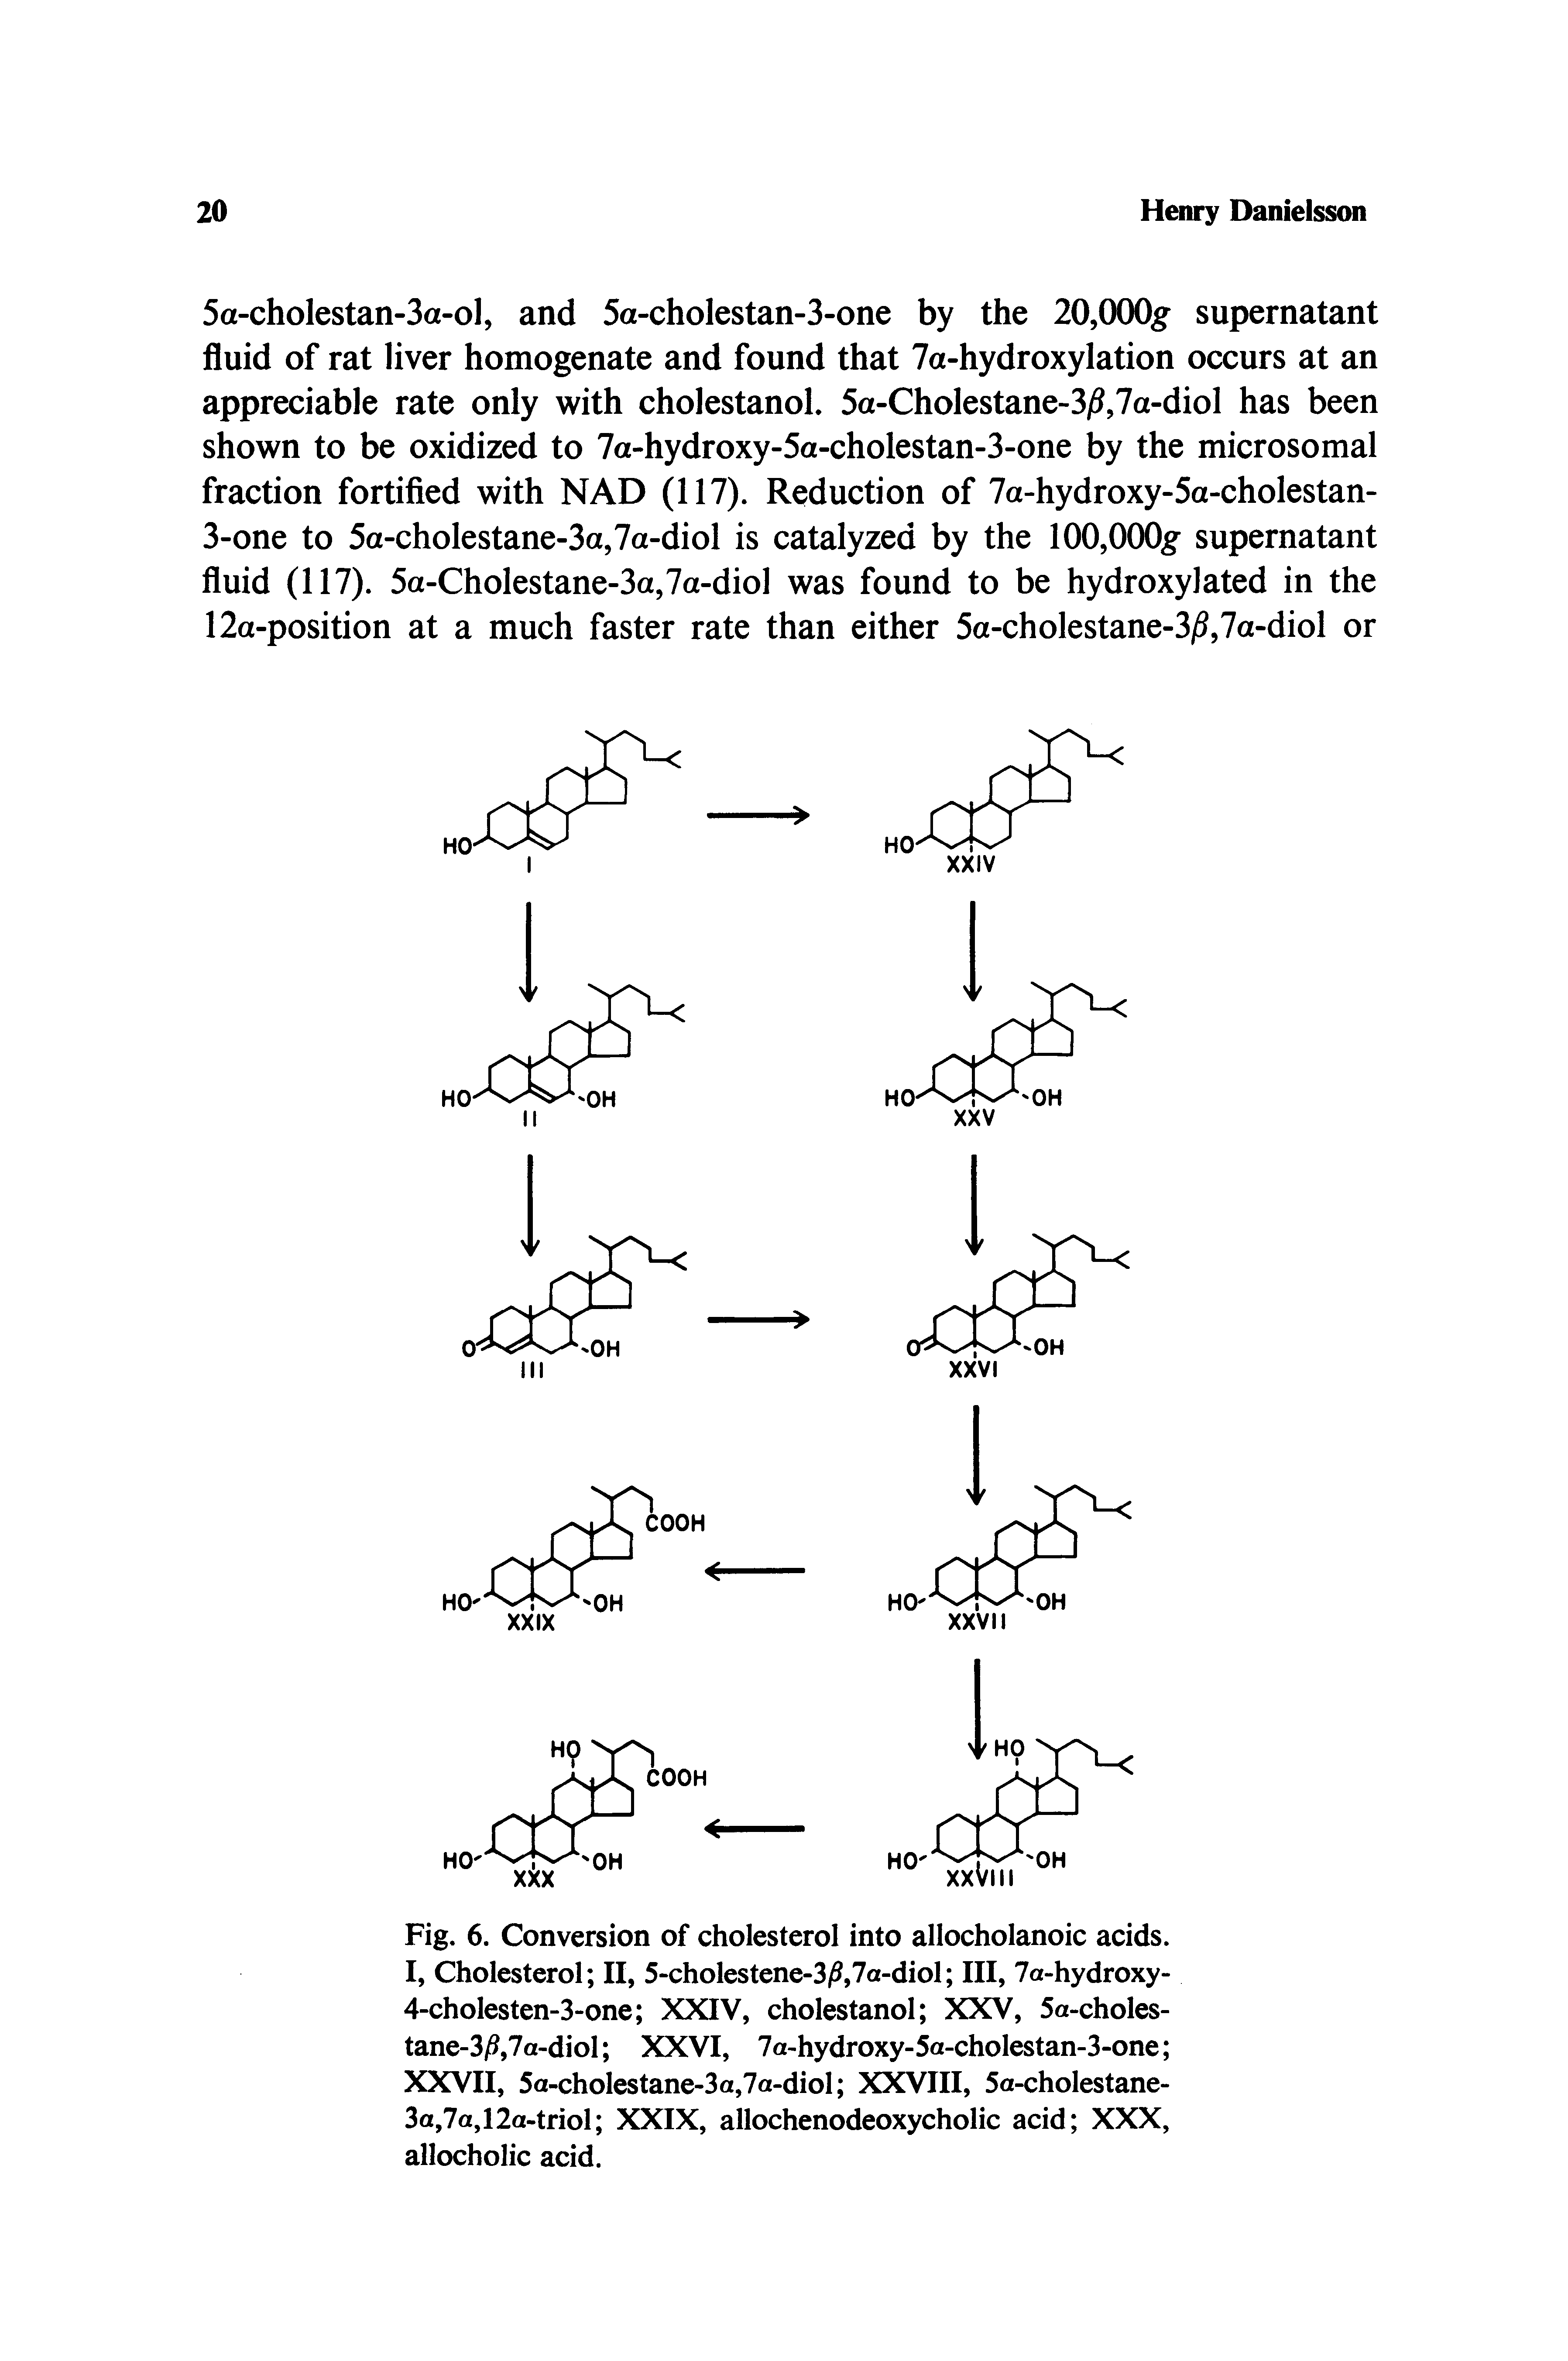 Fig. 6. Conversion of cholesterol into allocholanoic acids. I, Cholesterol II, 5-cholestene-3/5,7a-diol III, 7a-hydroxy-4-cholesten-3-one XXIV, cholestanol XXV, 5a-choles-tane-3i ,7a-diol XXVI, 7a hydroxy-5a-cholestan-3-one XXVII, 5a-cholestane-3a,7a-diol XXVIII, 5a-cholestane-3a,7a,12a-triol XXIX, allochenodeoxycholic acid XXX, allocholic acid.